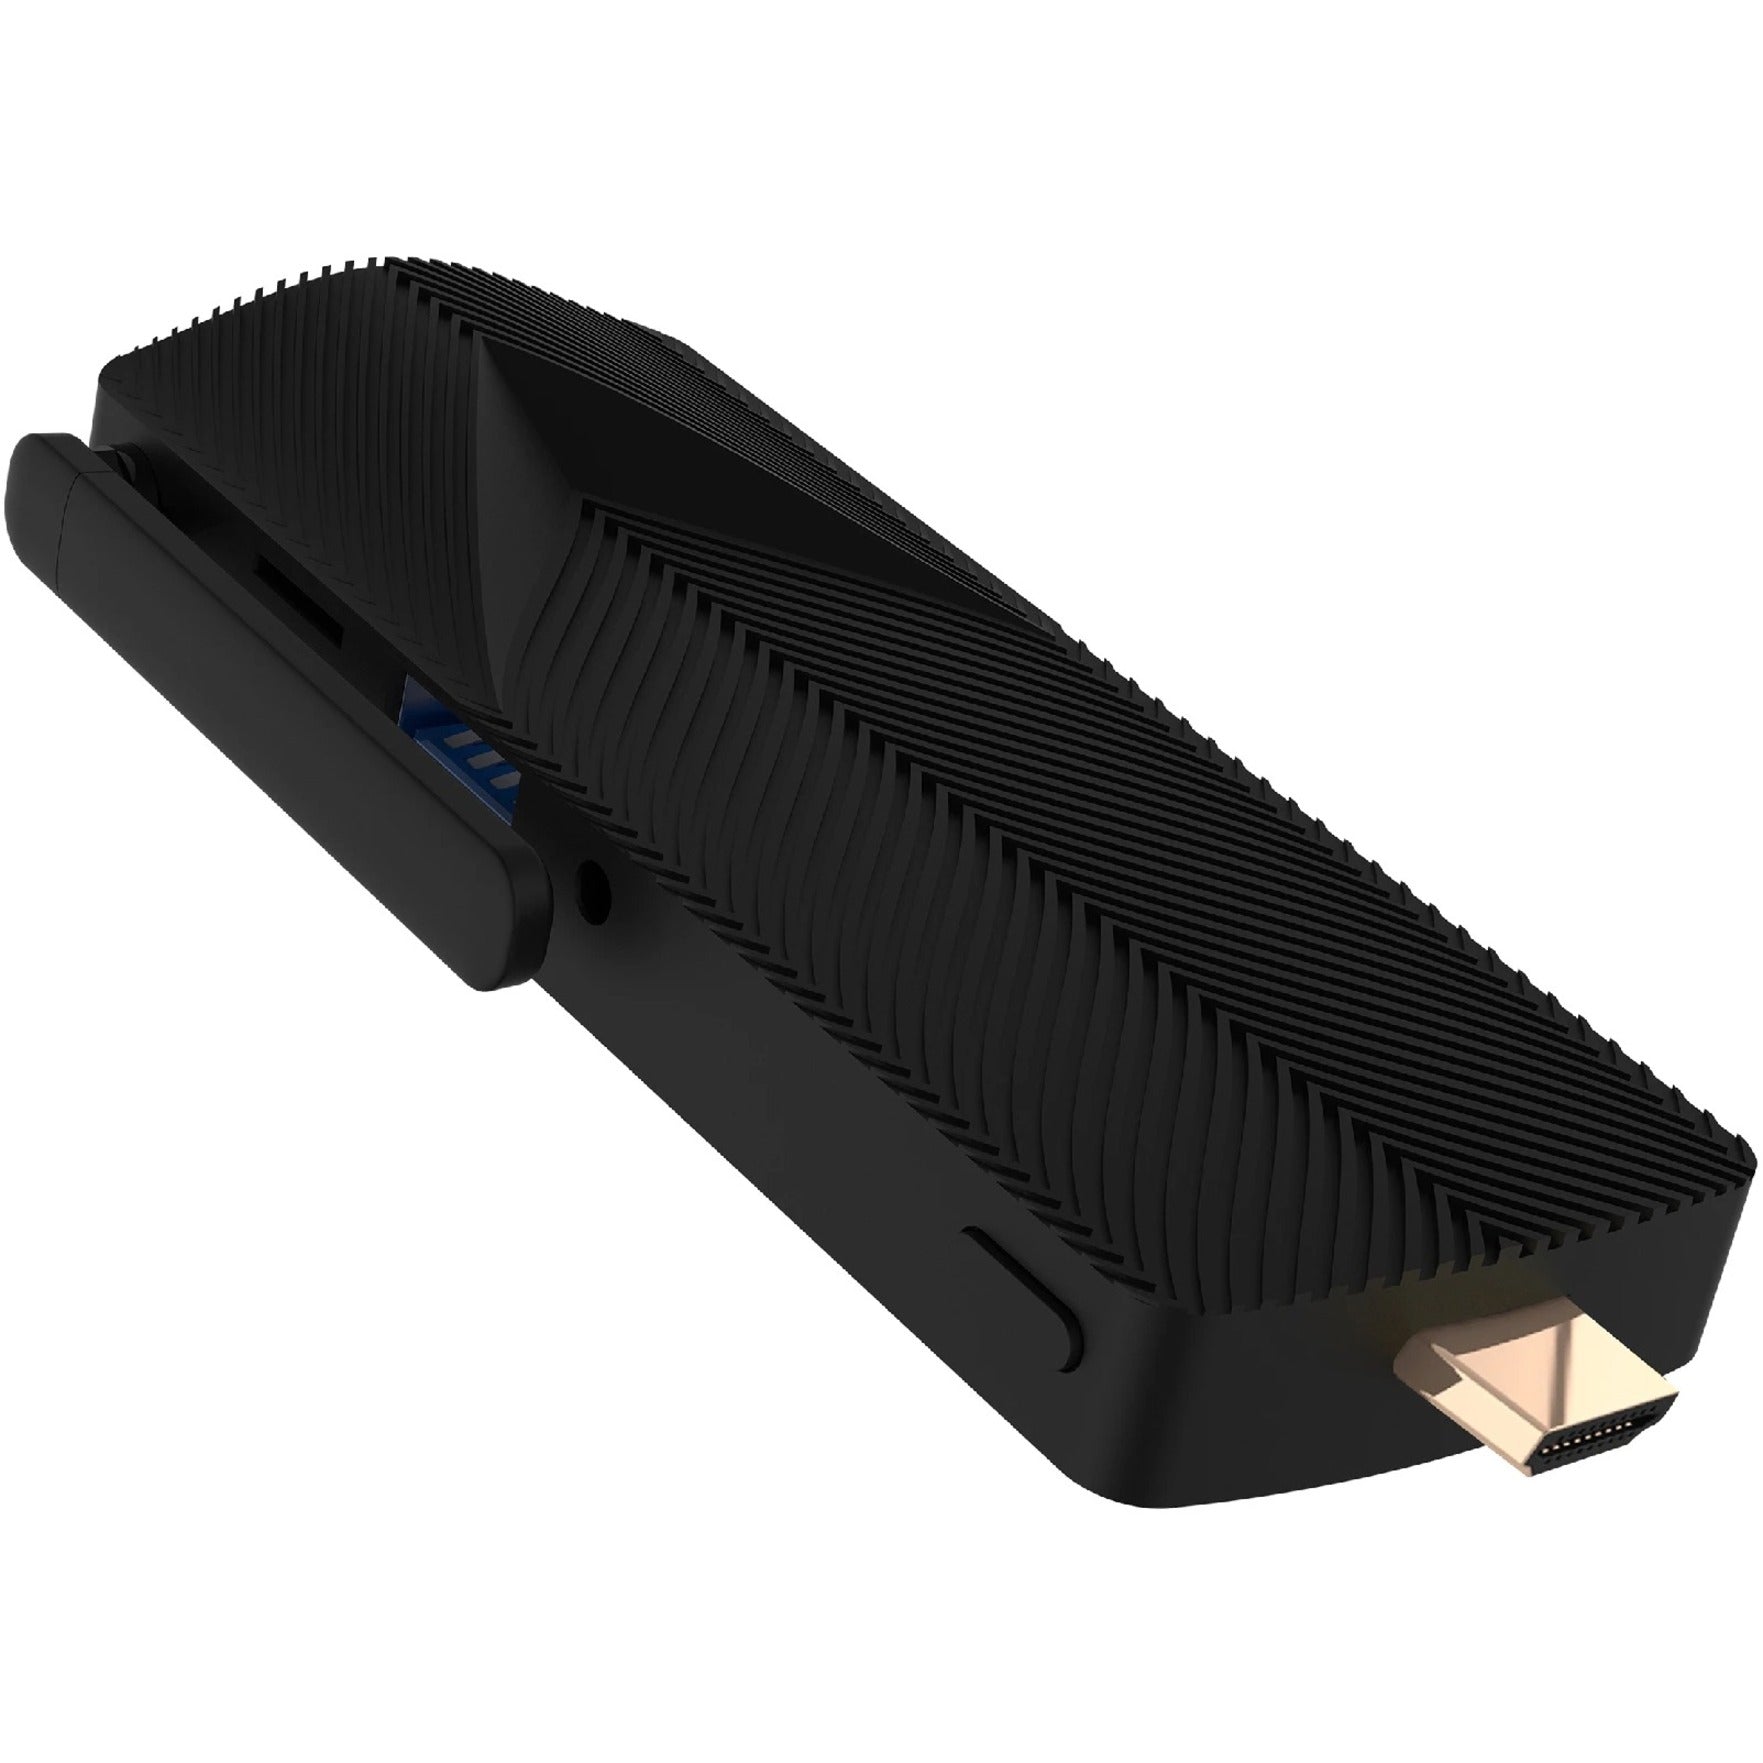 Azulle AG3223 Access4 Pro Mini PC Stick with Linux, Quad-core Celeron J4125, 4GB RAM, 64GB Flash Memory, HDMI, Gigabit Ethernet